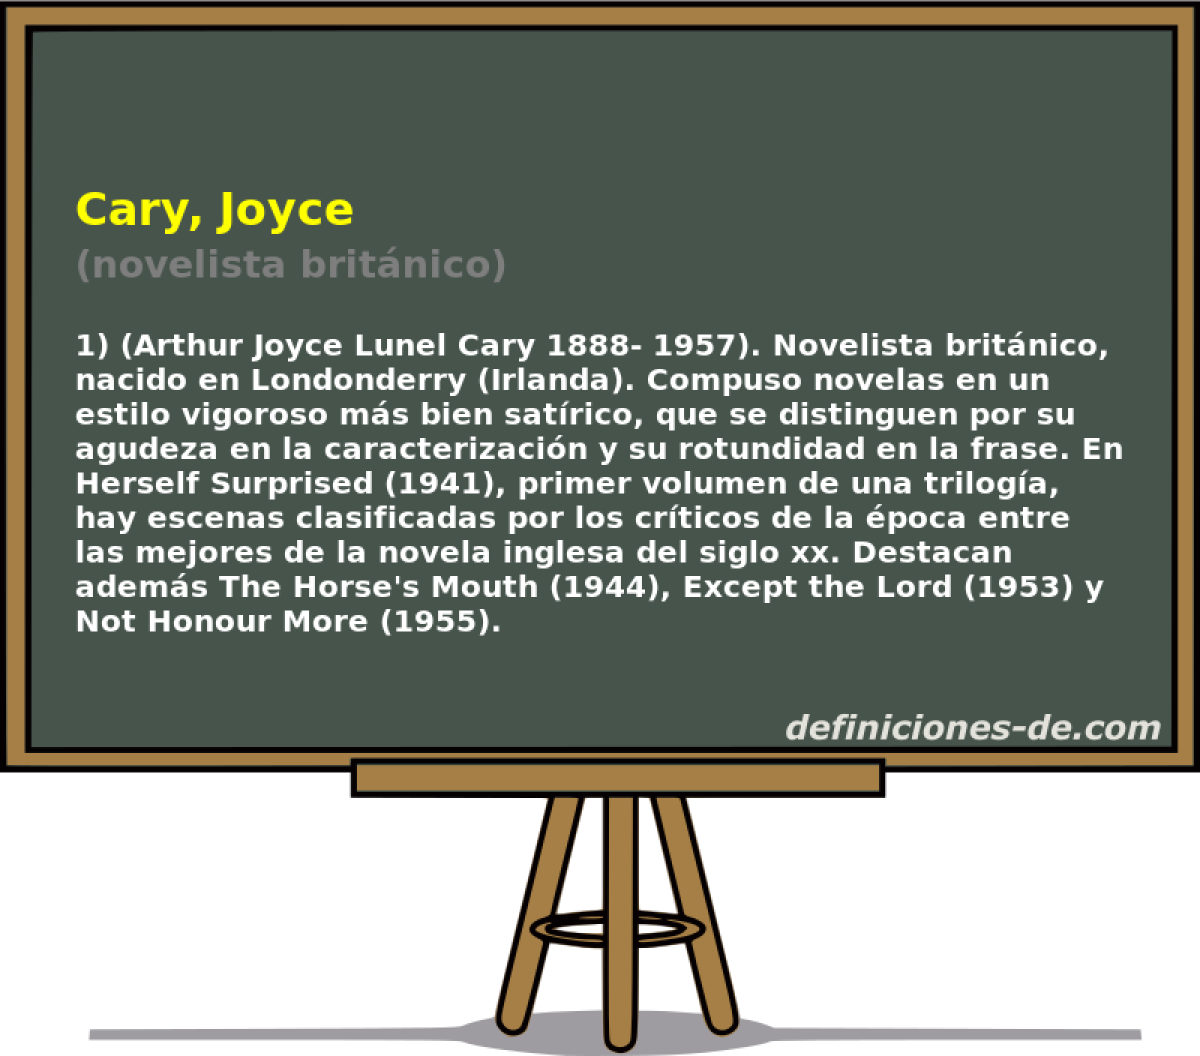 Cary, Joyce (novelista britnico)